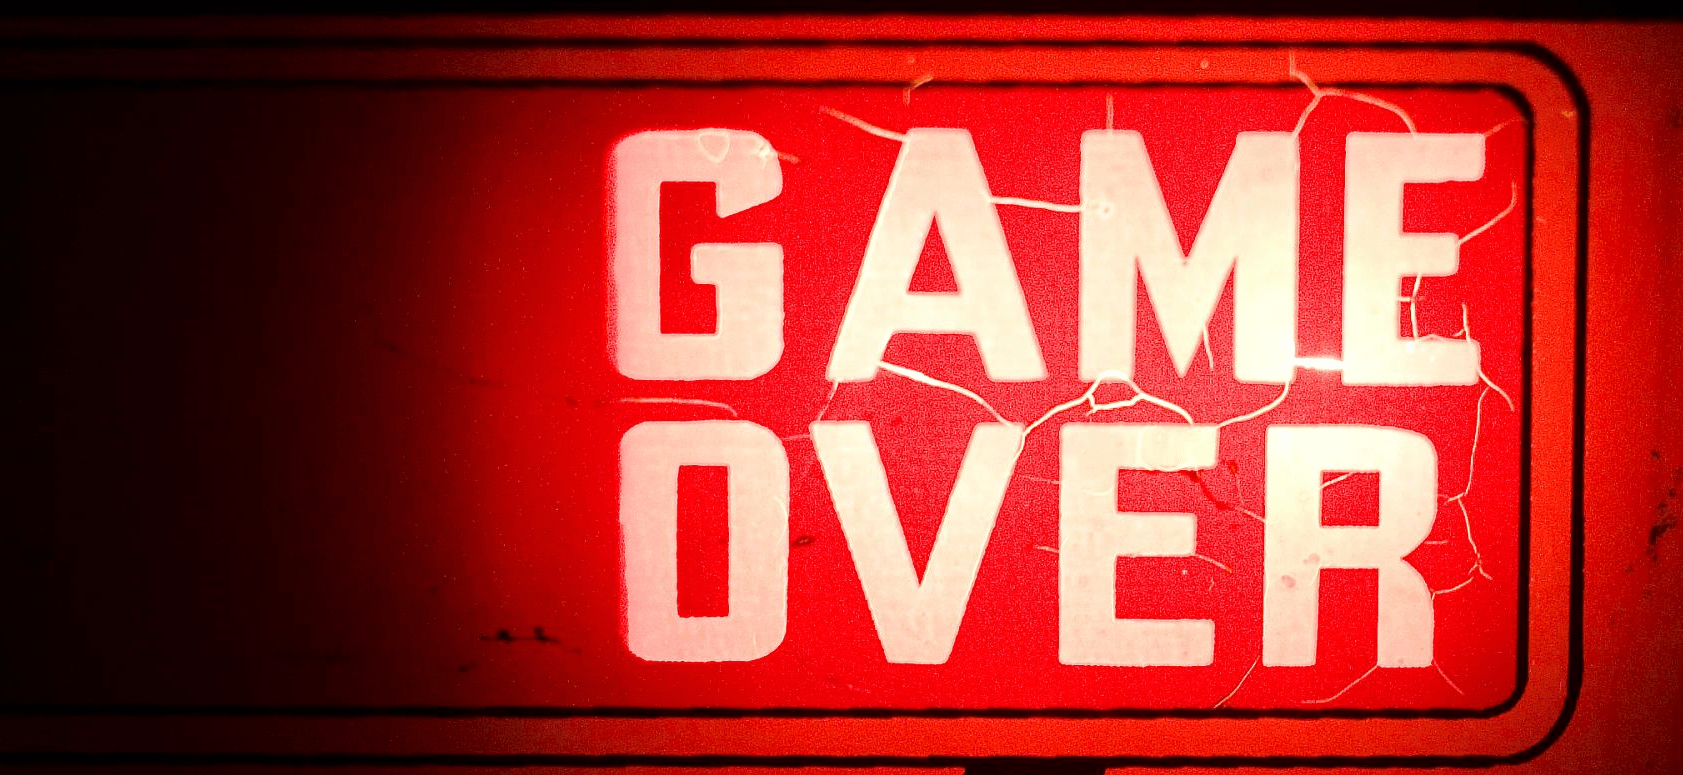 Game over! Start again!